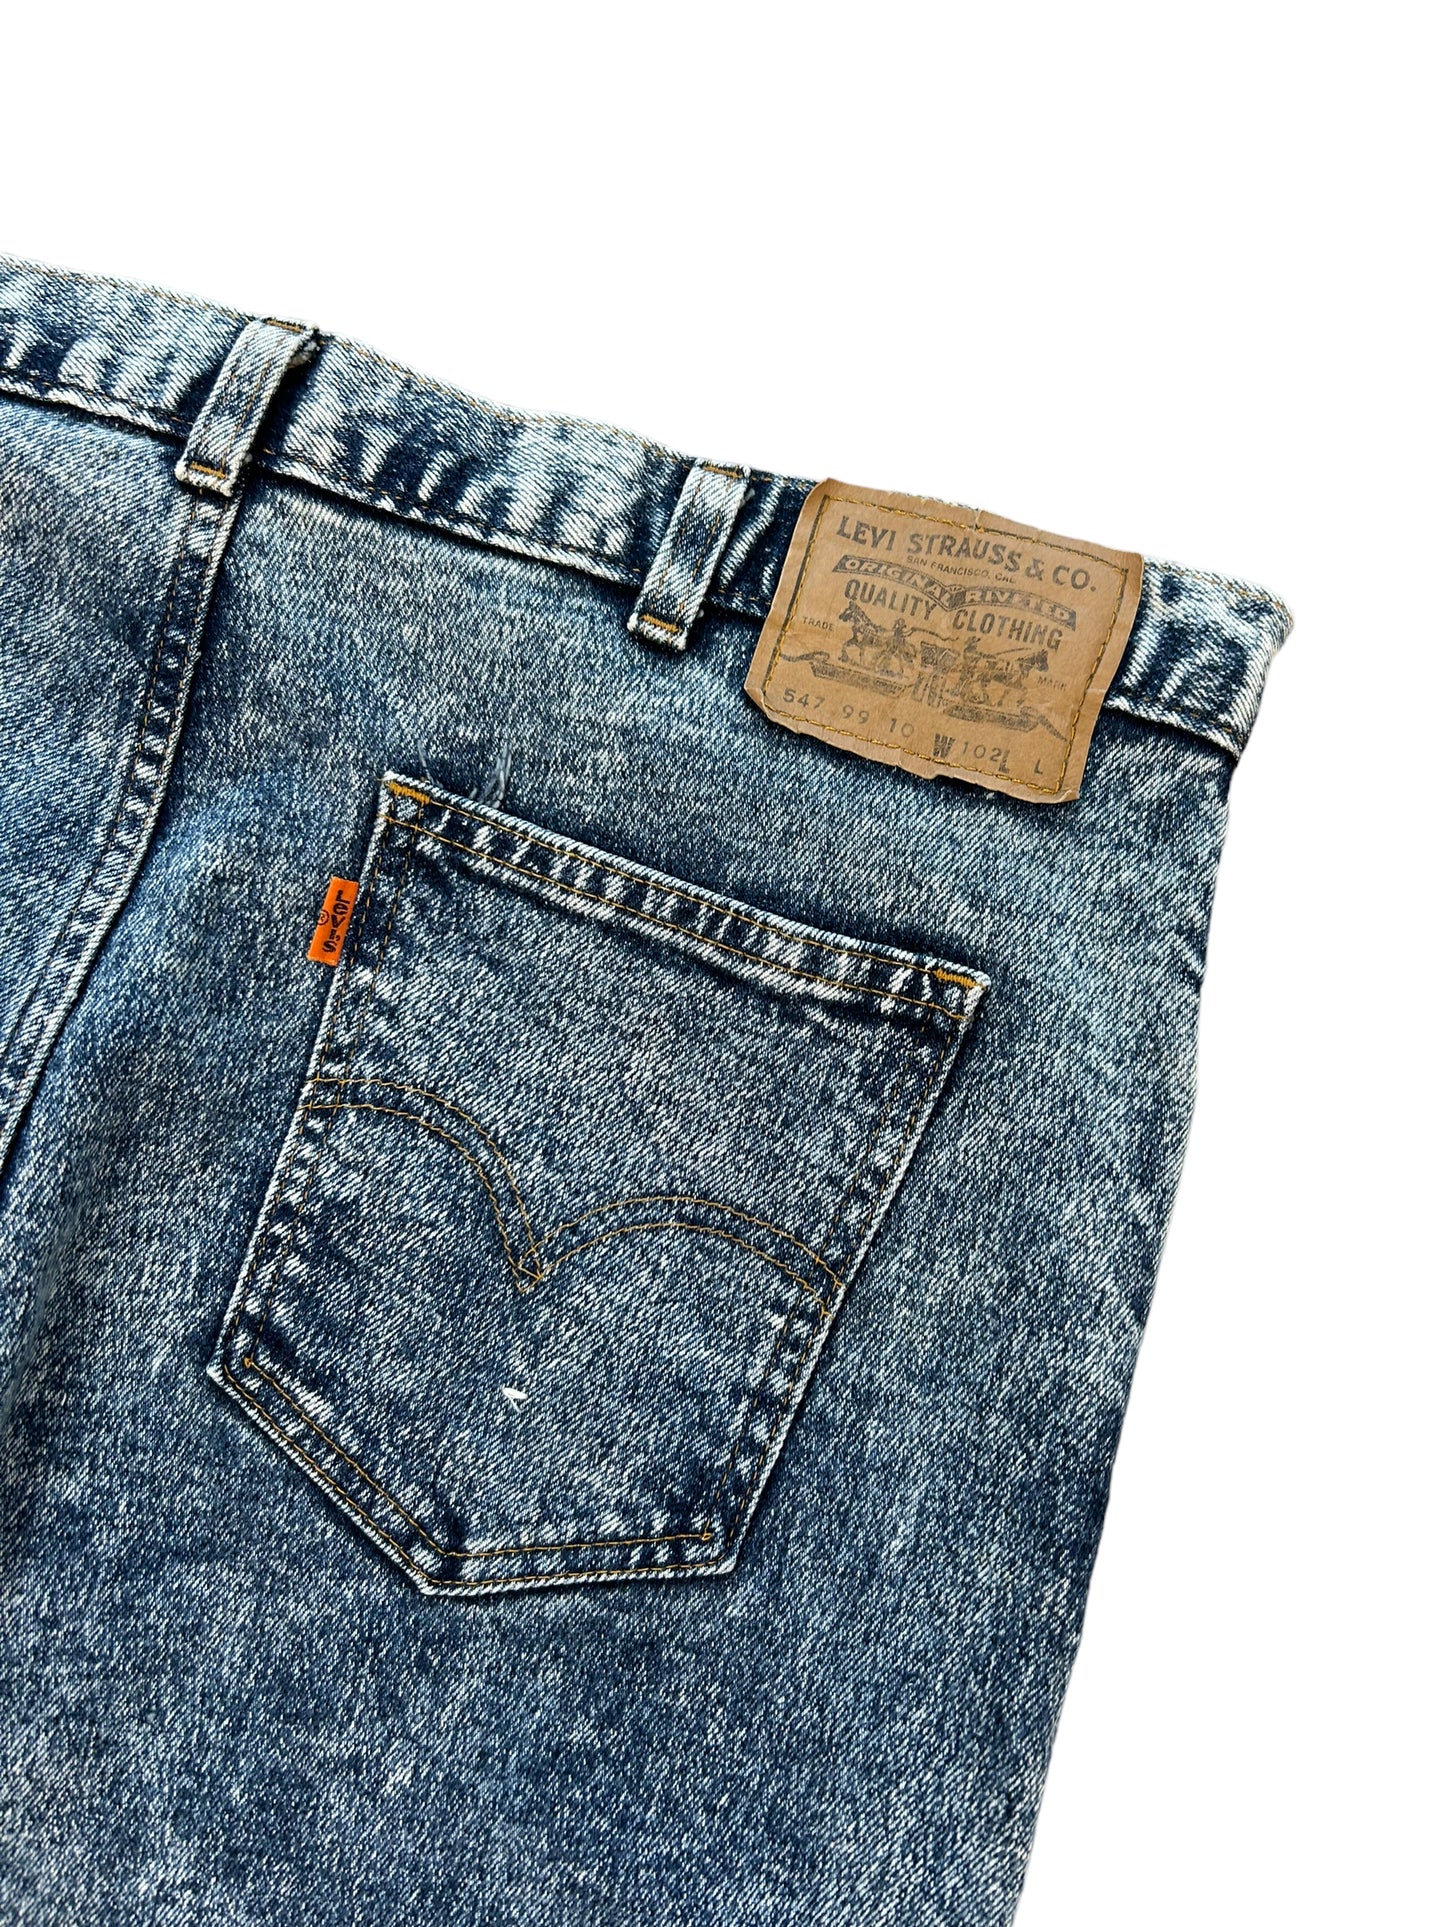 90's Levis Orange Tab Denim Jeans